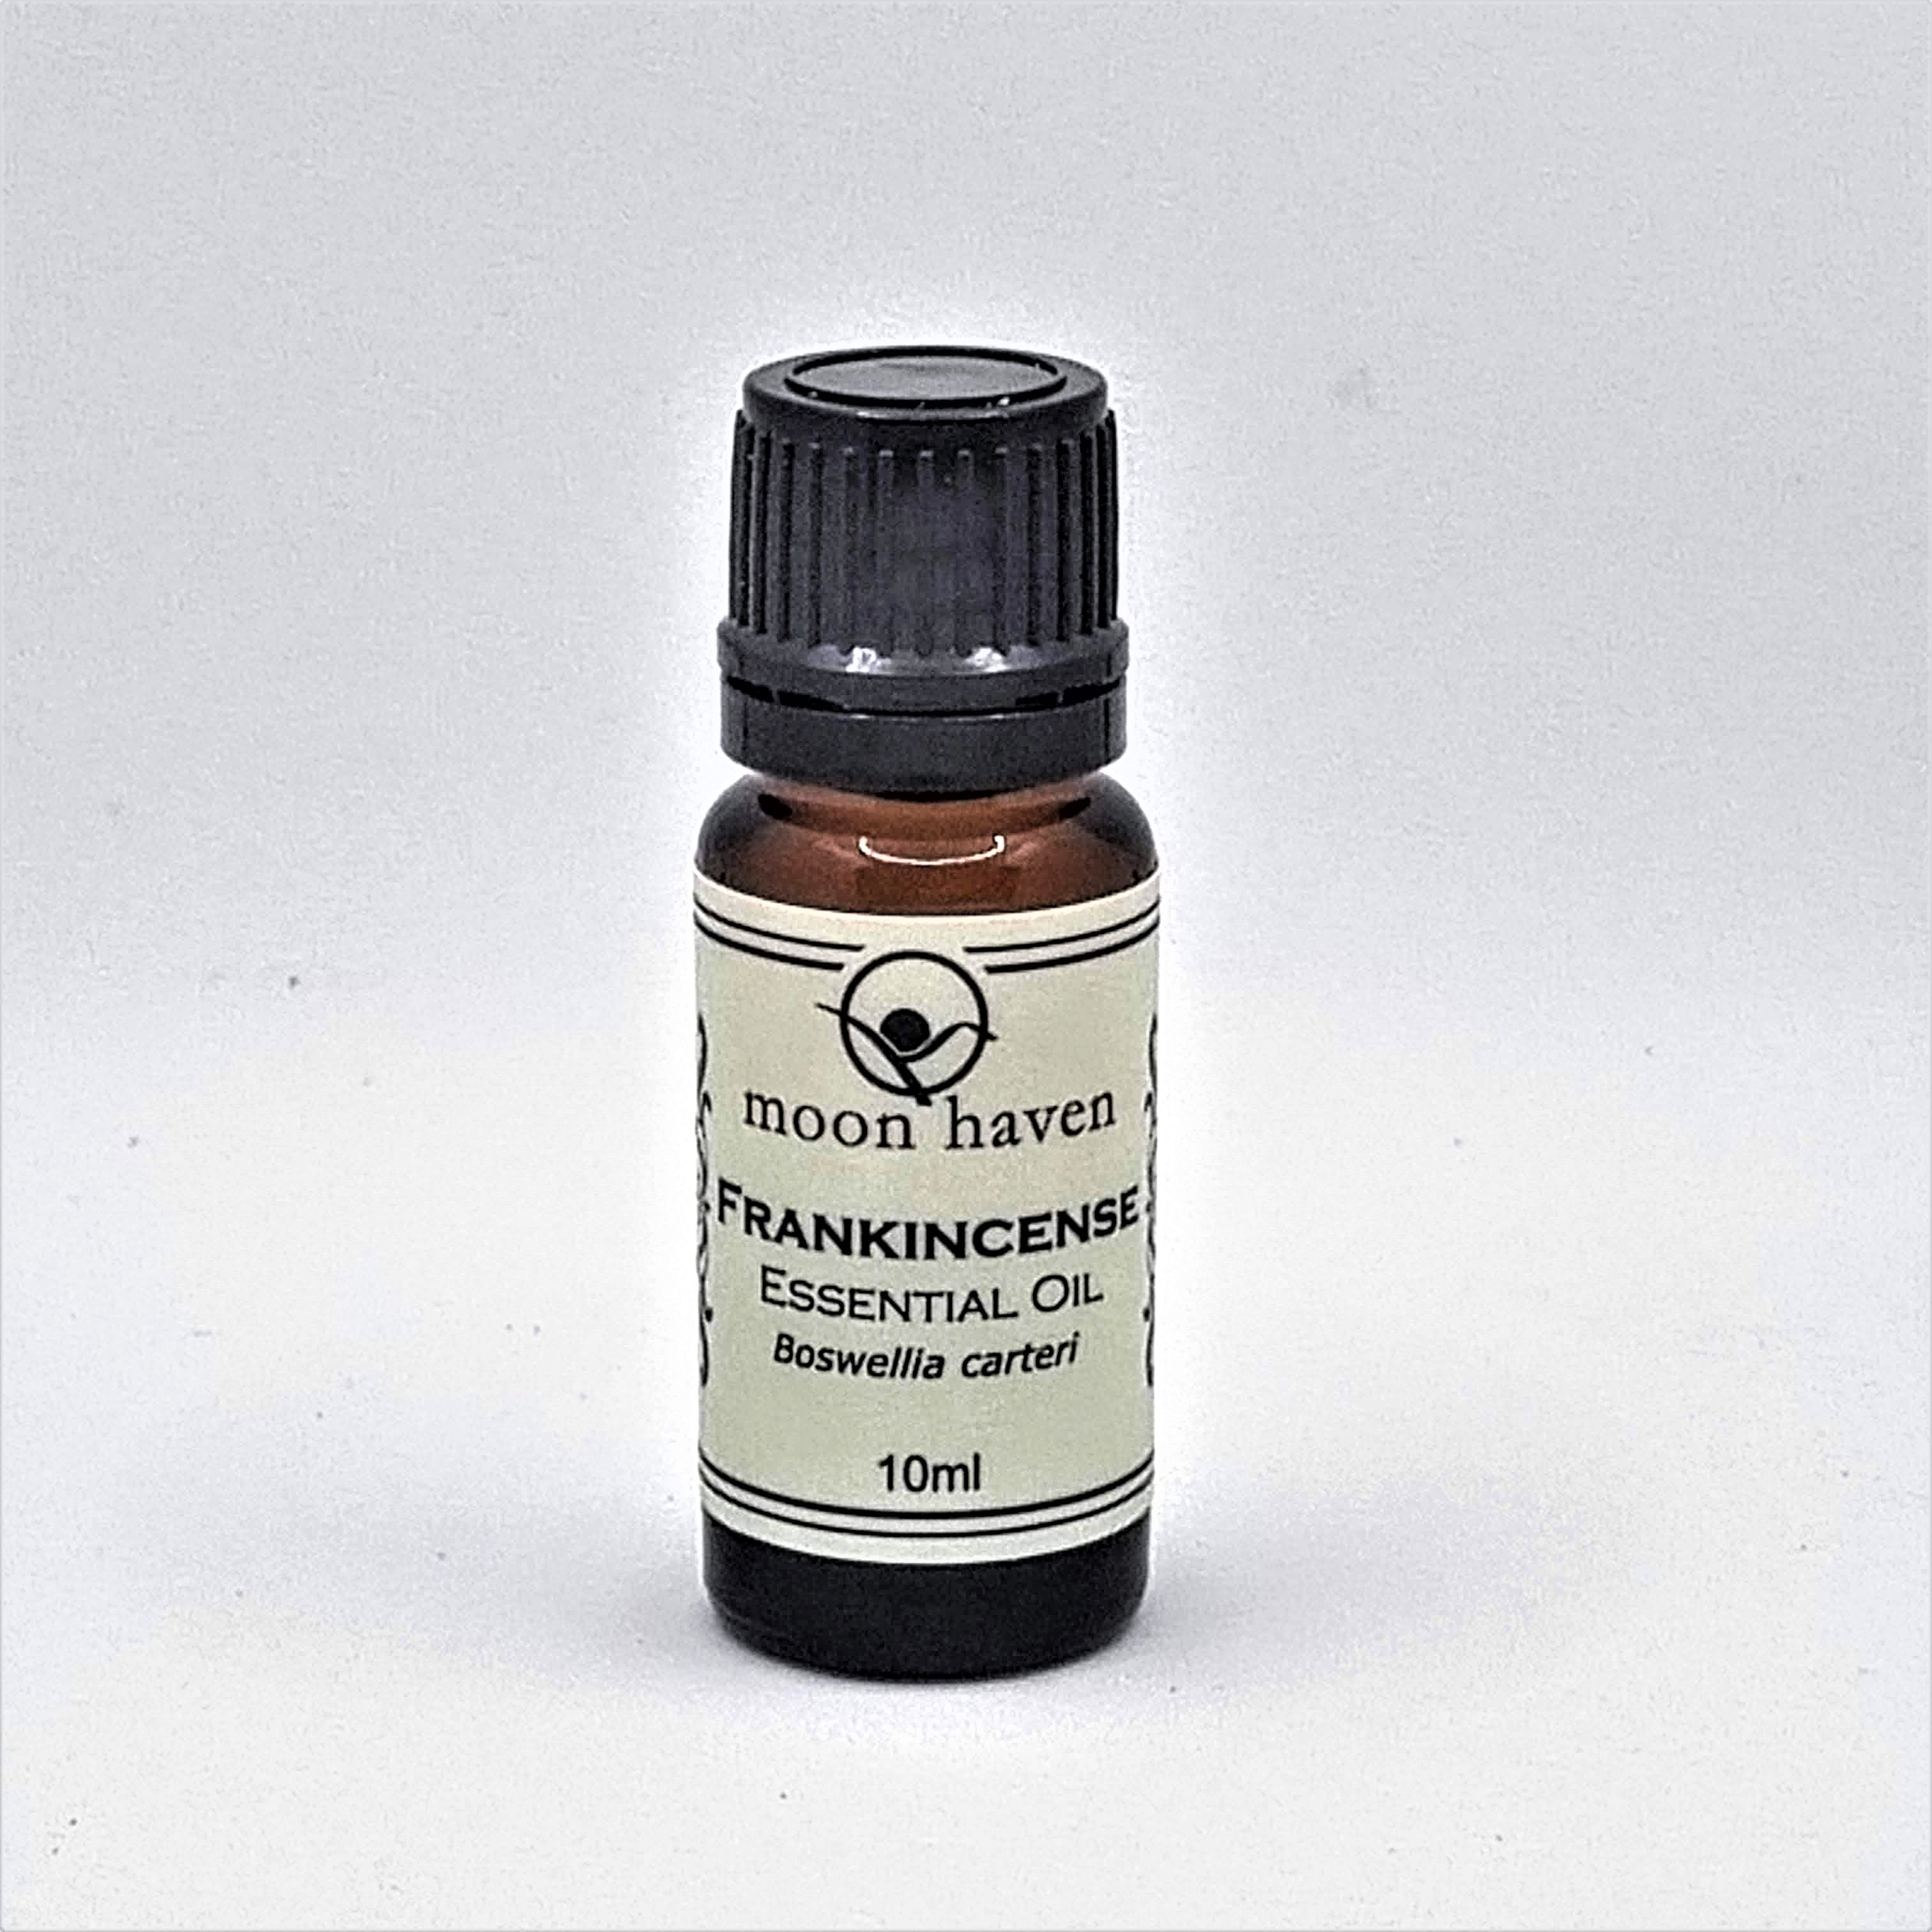 MH's Frankincense Essential Oil